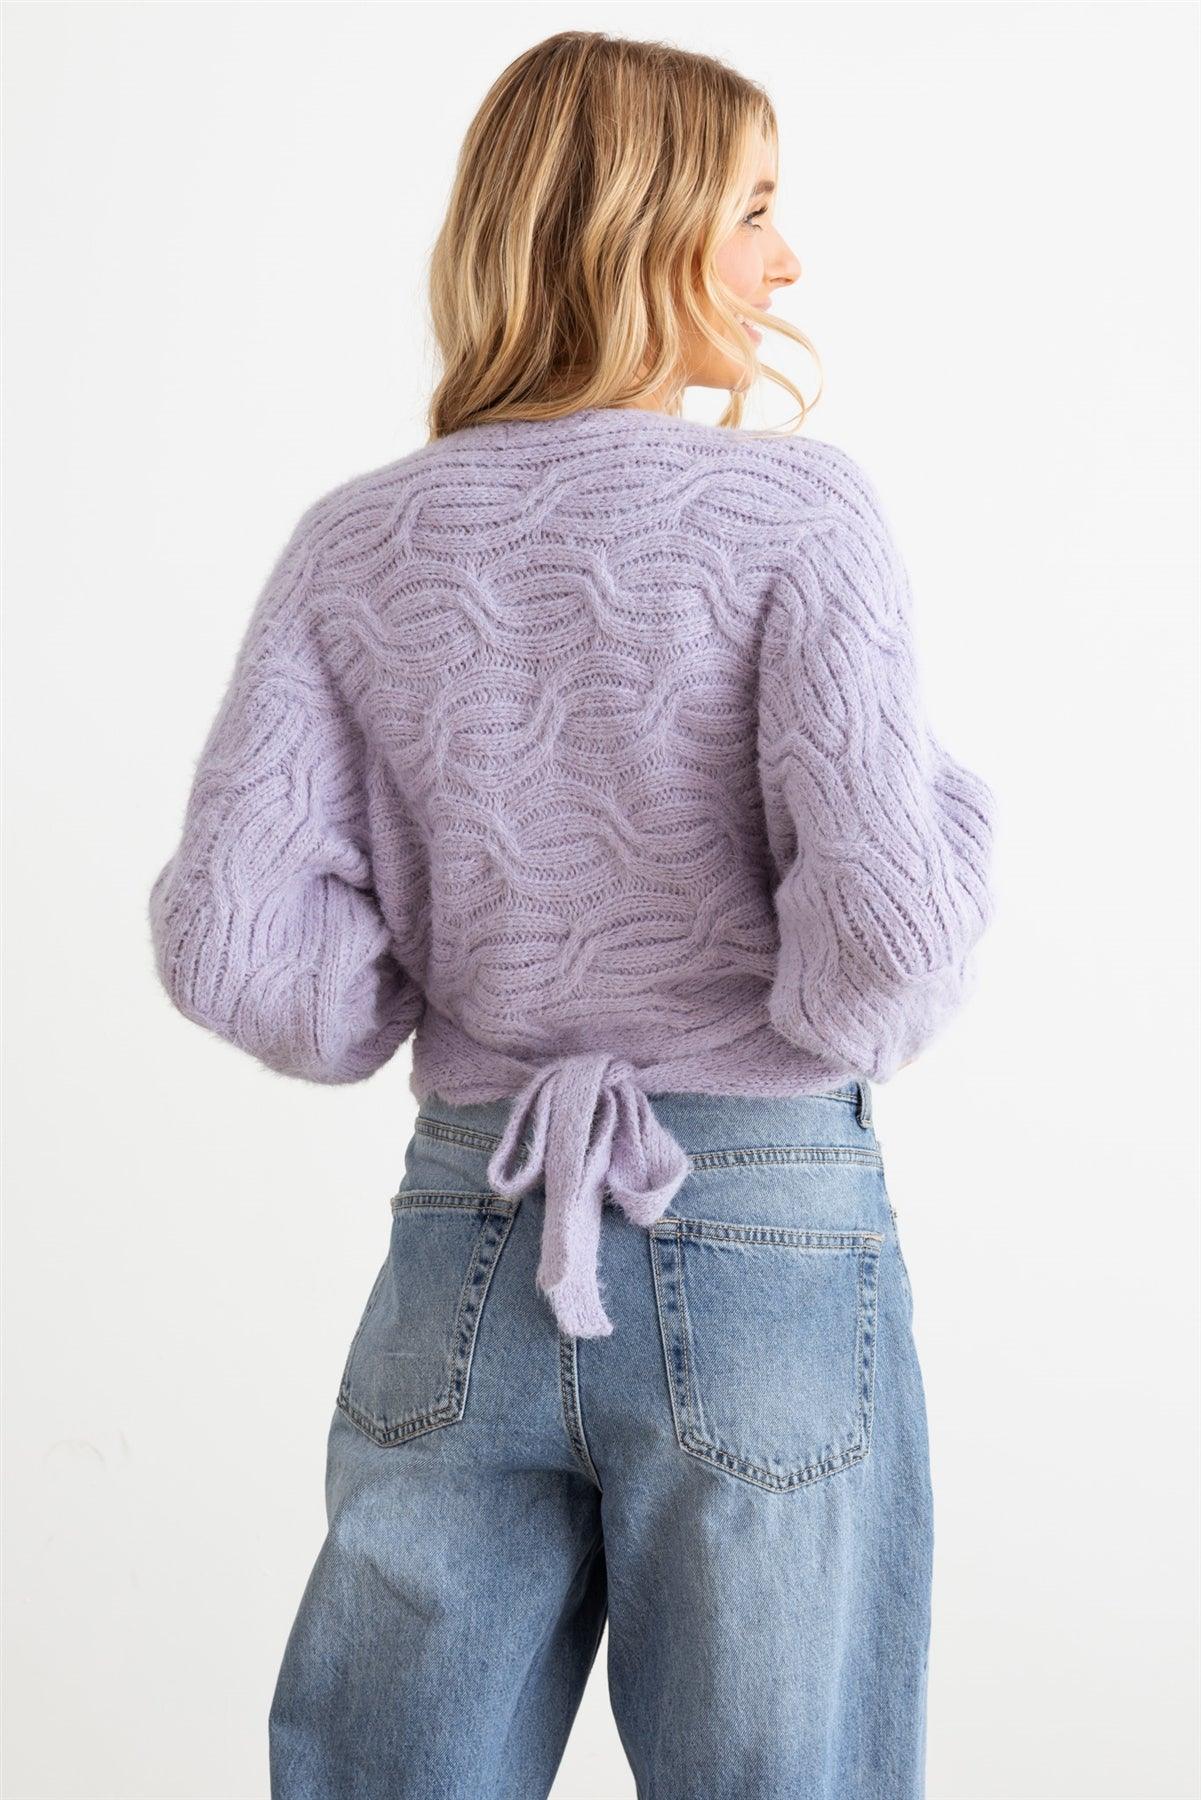 Fuzzy Knit Wrap Long Sleeve Sweater Cardigan - Tasha Apparel